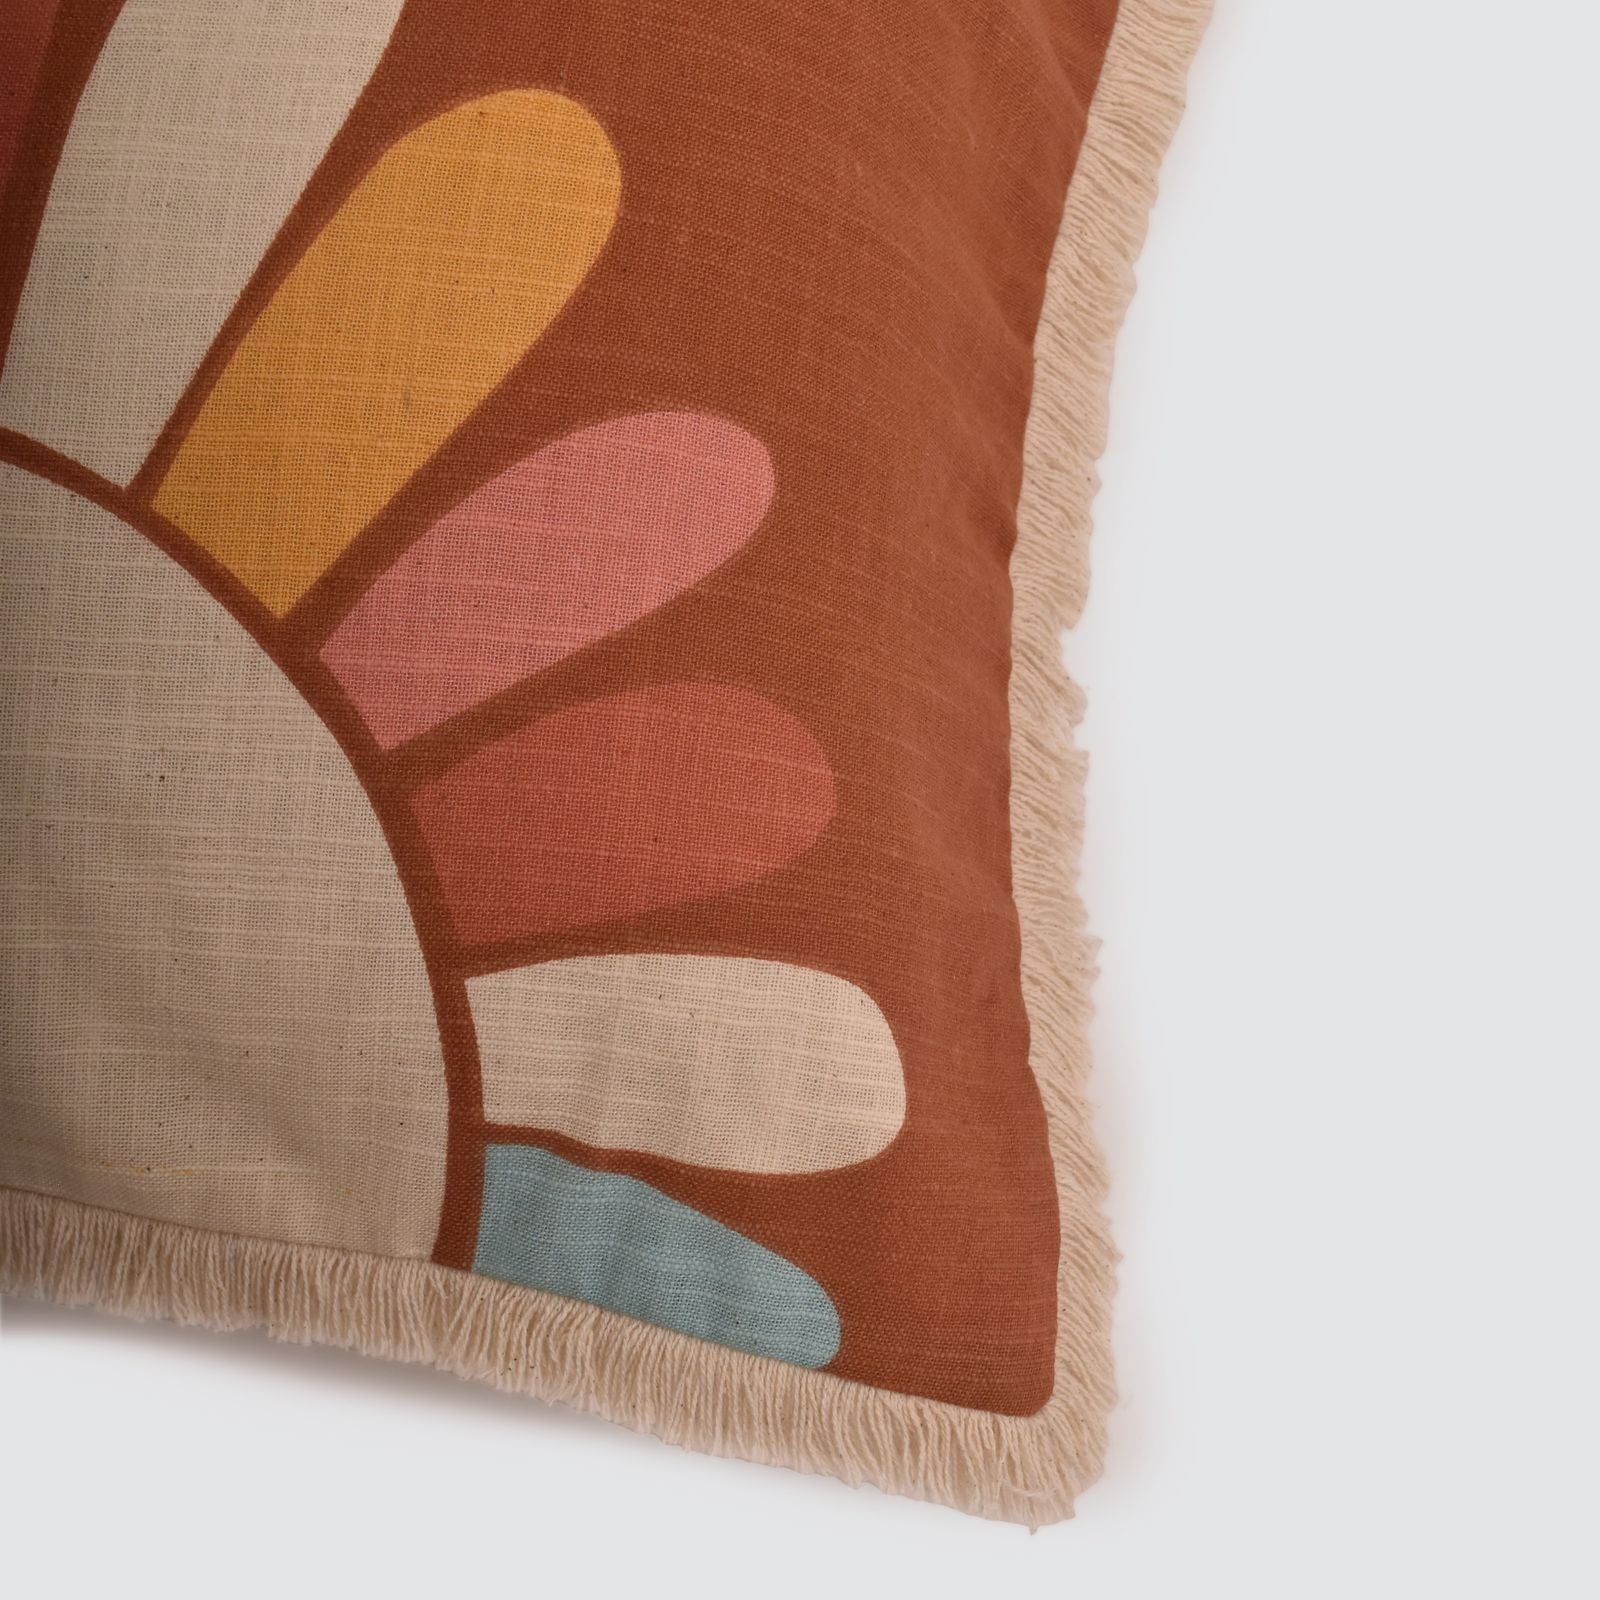 close-up of corner of pillow with sun design.